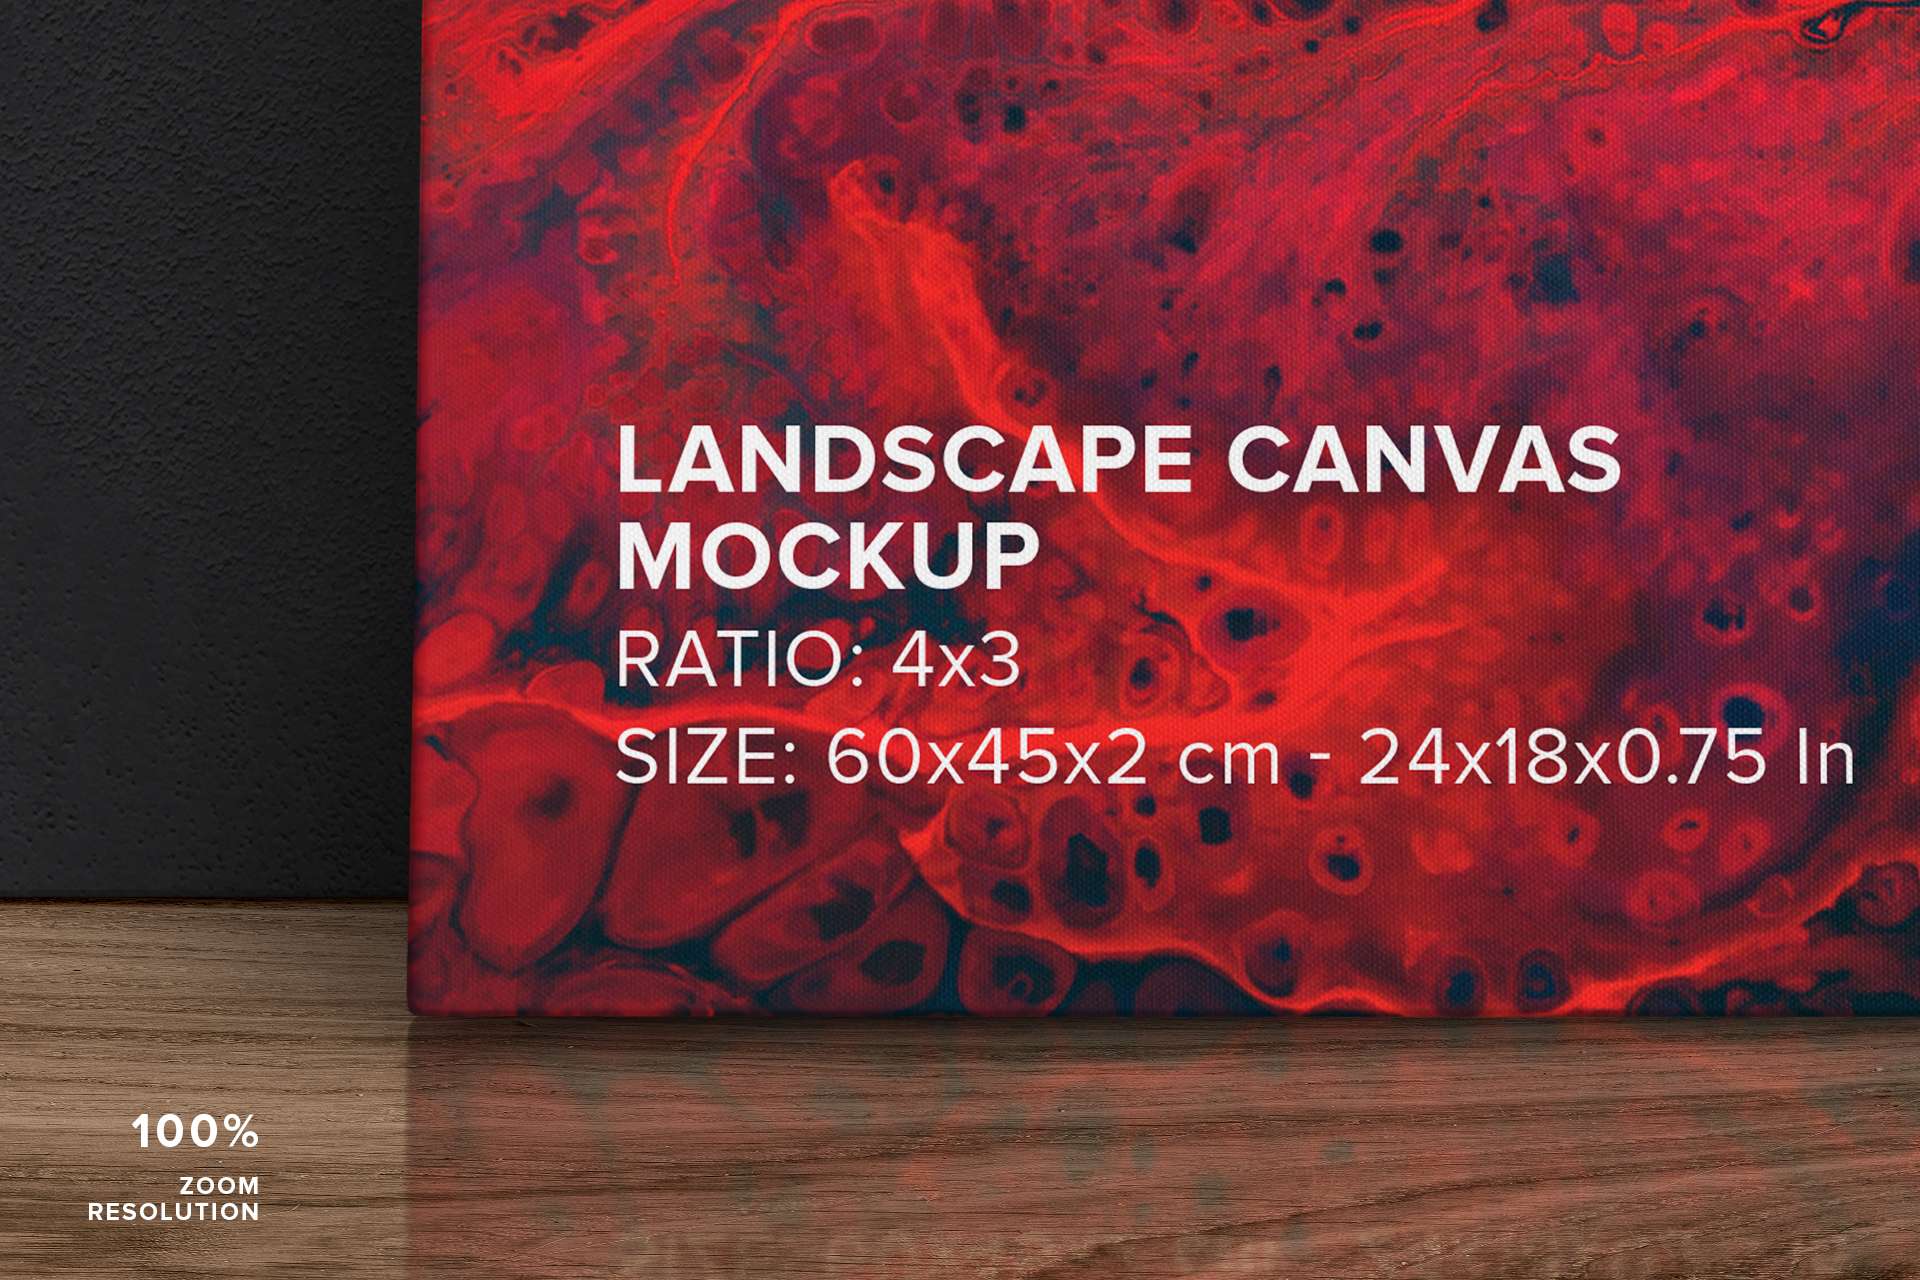 Front Leaning Landscape Canvas Ratio 4×3 Mockup